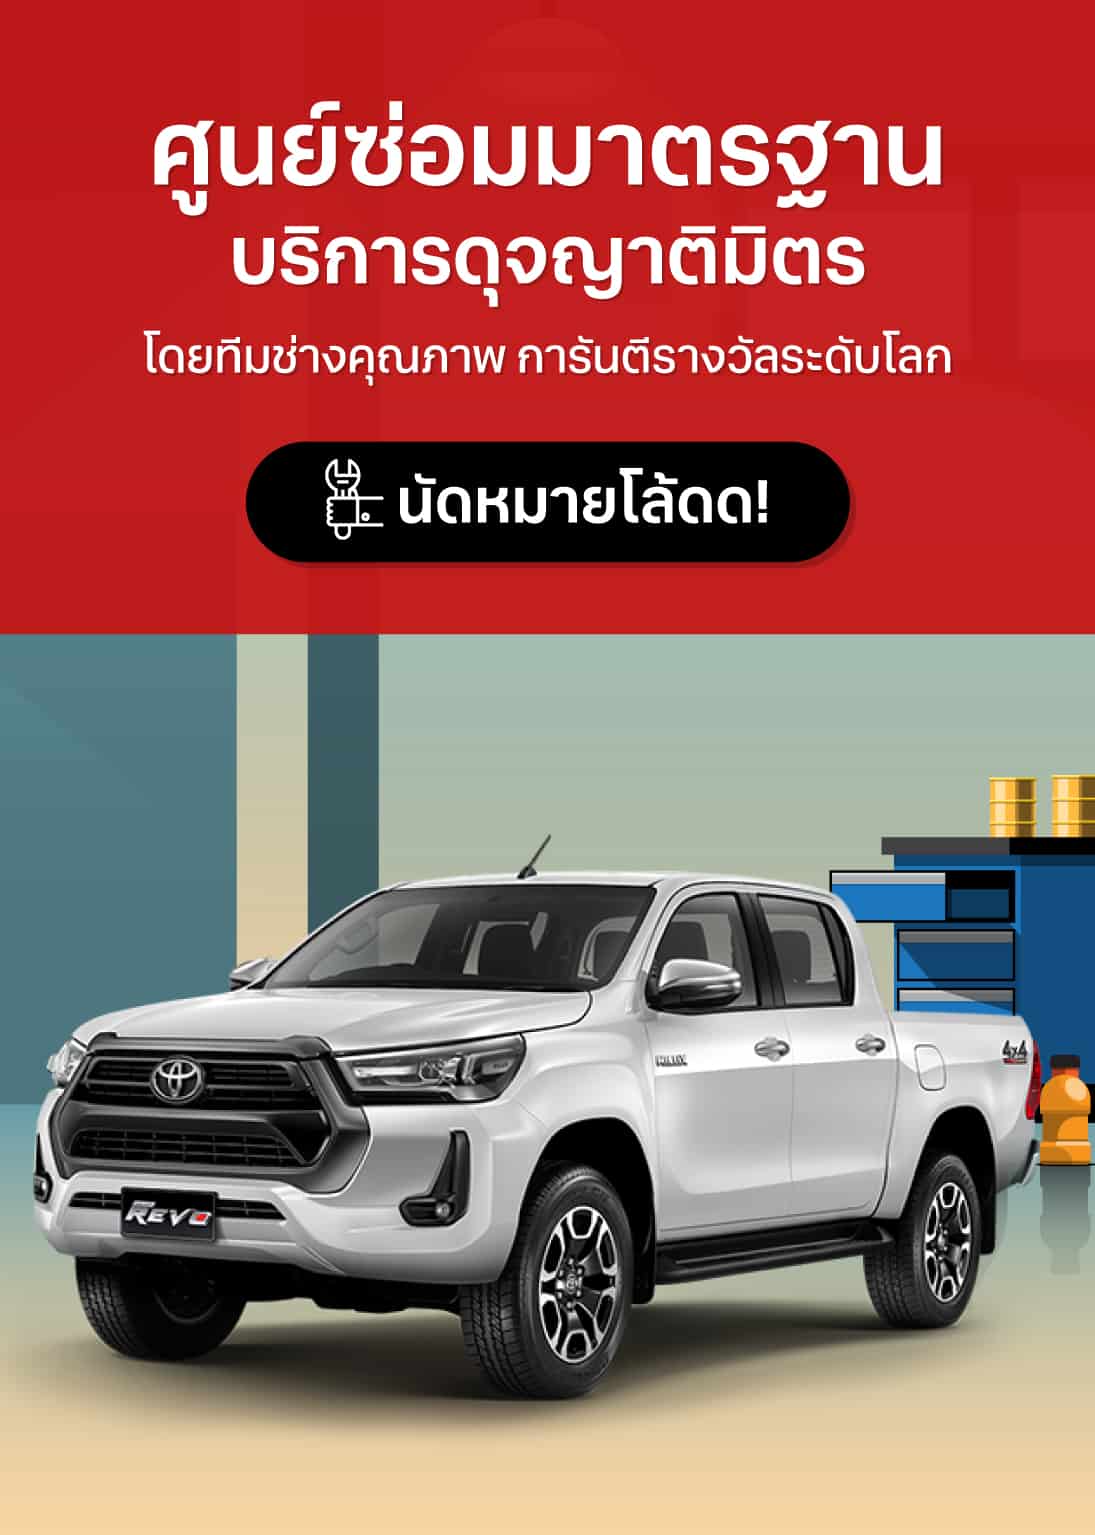 Toyota Khonkaen ServiceCar